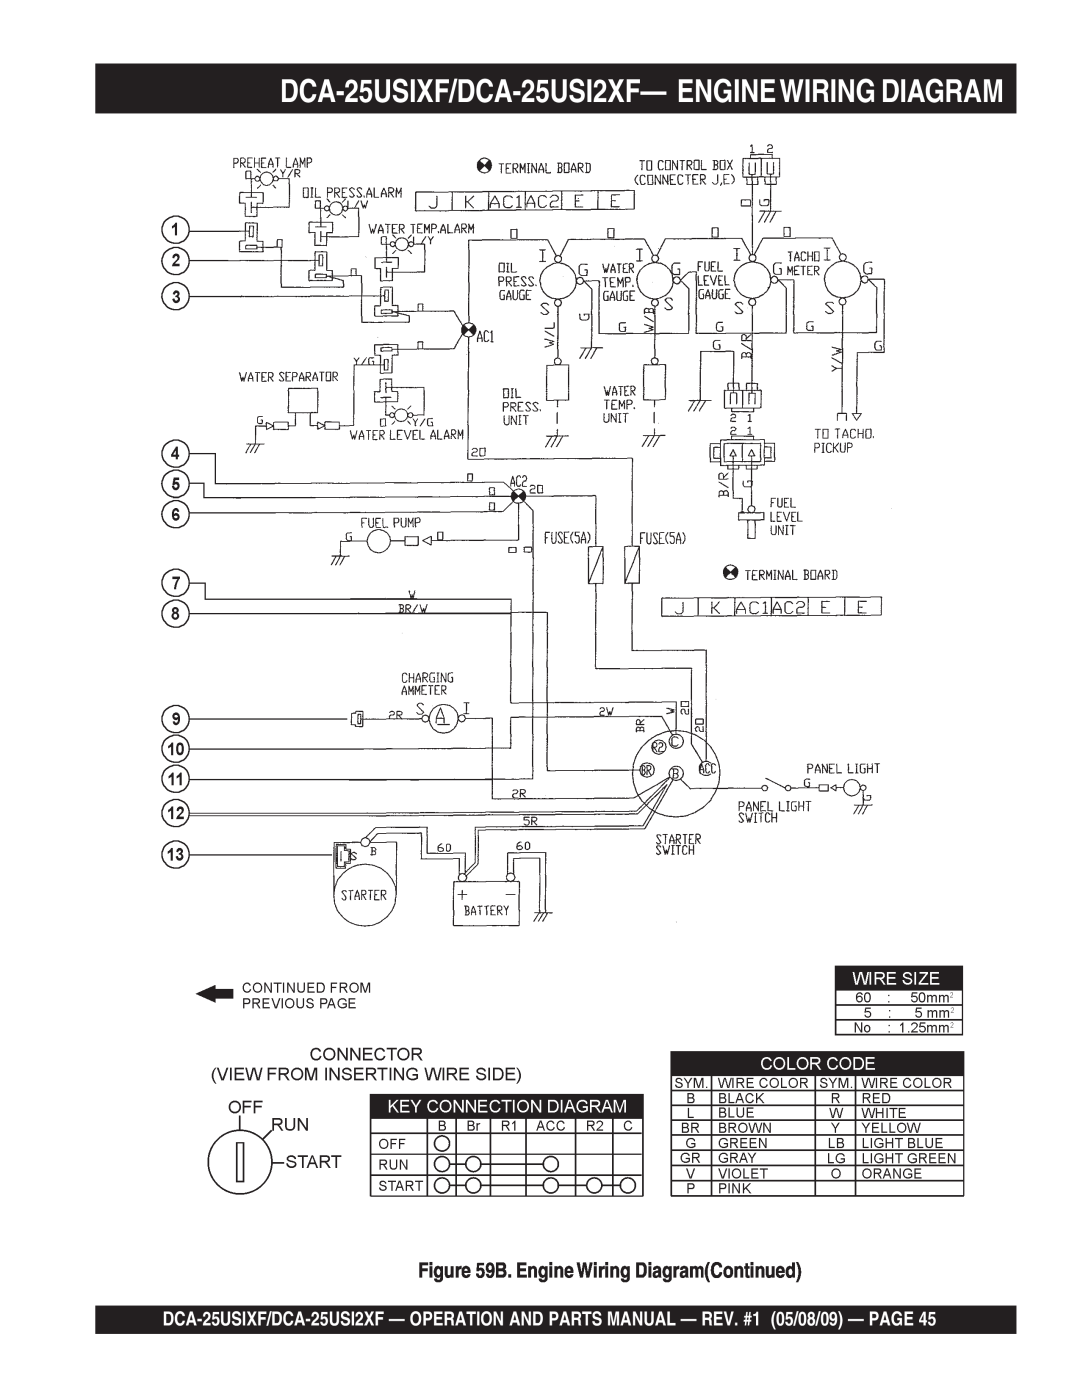 Multiquip operation manual B. Engine Wiring DiagramContinued, DCA-25USIXF/DCA-25USI2XF- ENGINEWIRING DIAGRAM 